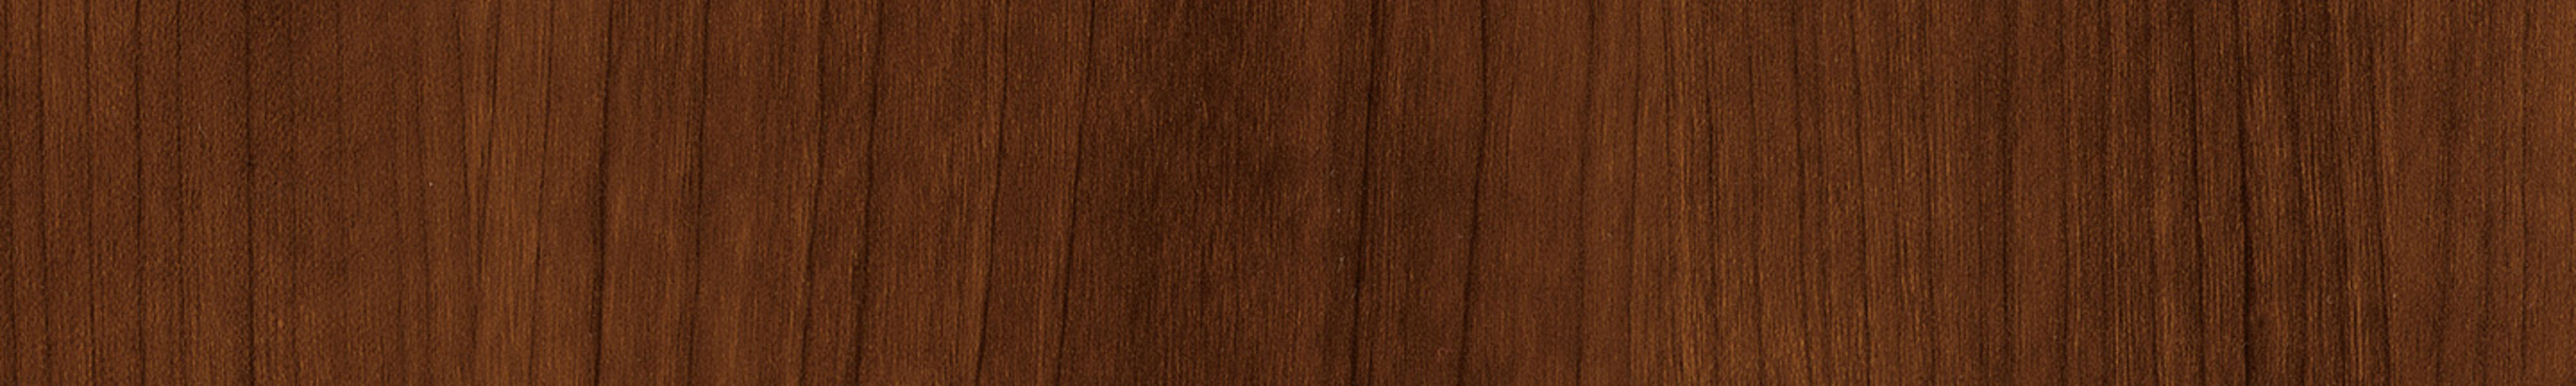 skai® classico Portland Cherry mocca     0,30 1420